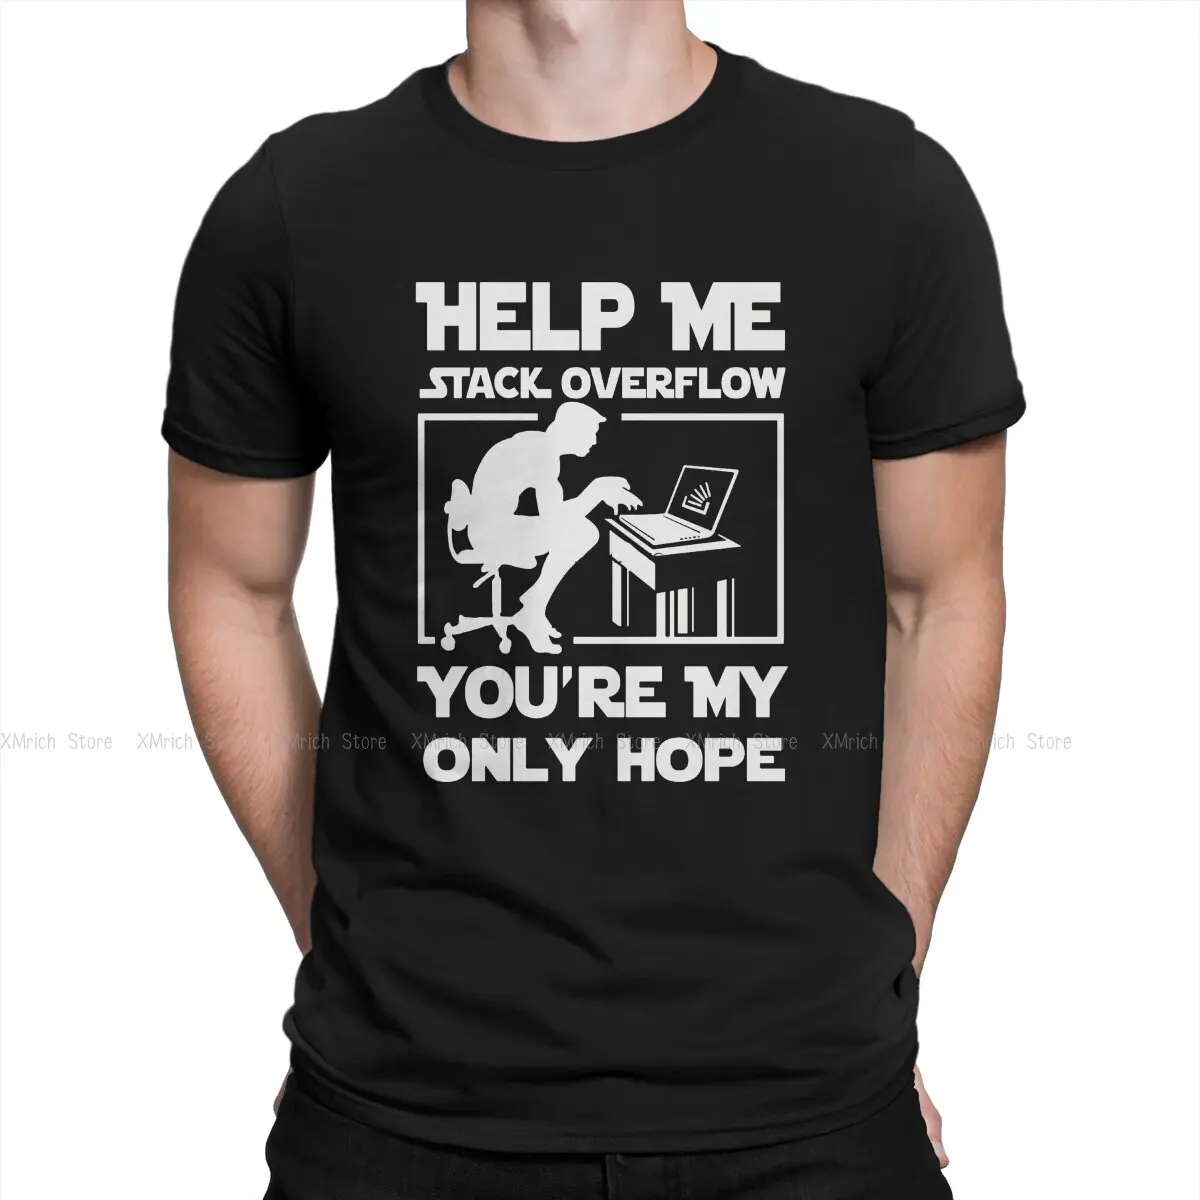 

Help Me Stack Overflow Special TShirt Software Developer IT Programmer Geek Leisure T Shirt Hot Sale T-shirt For Adult